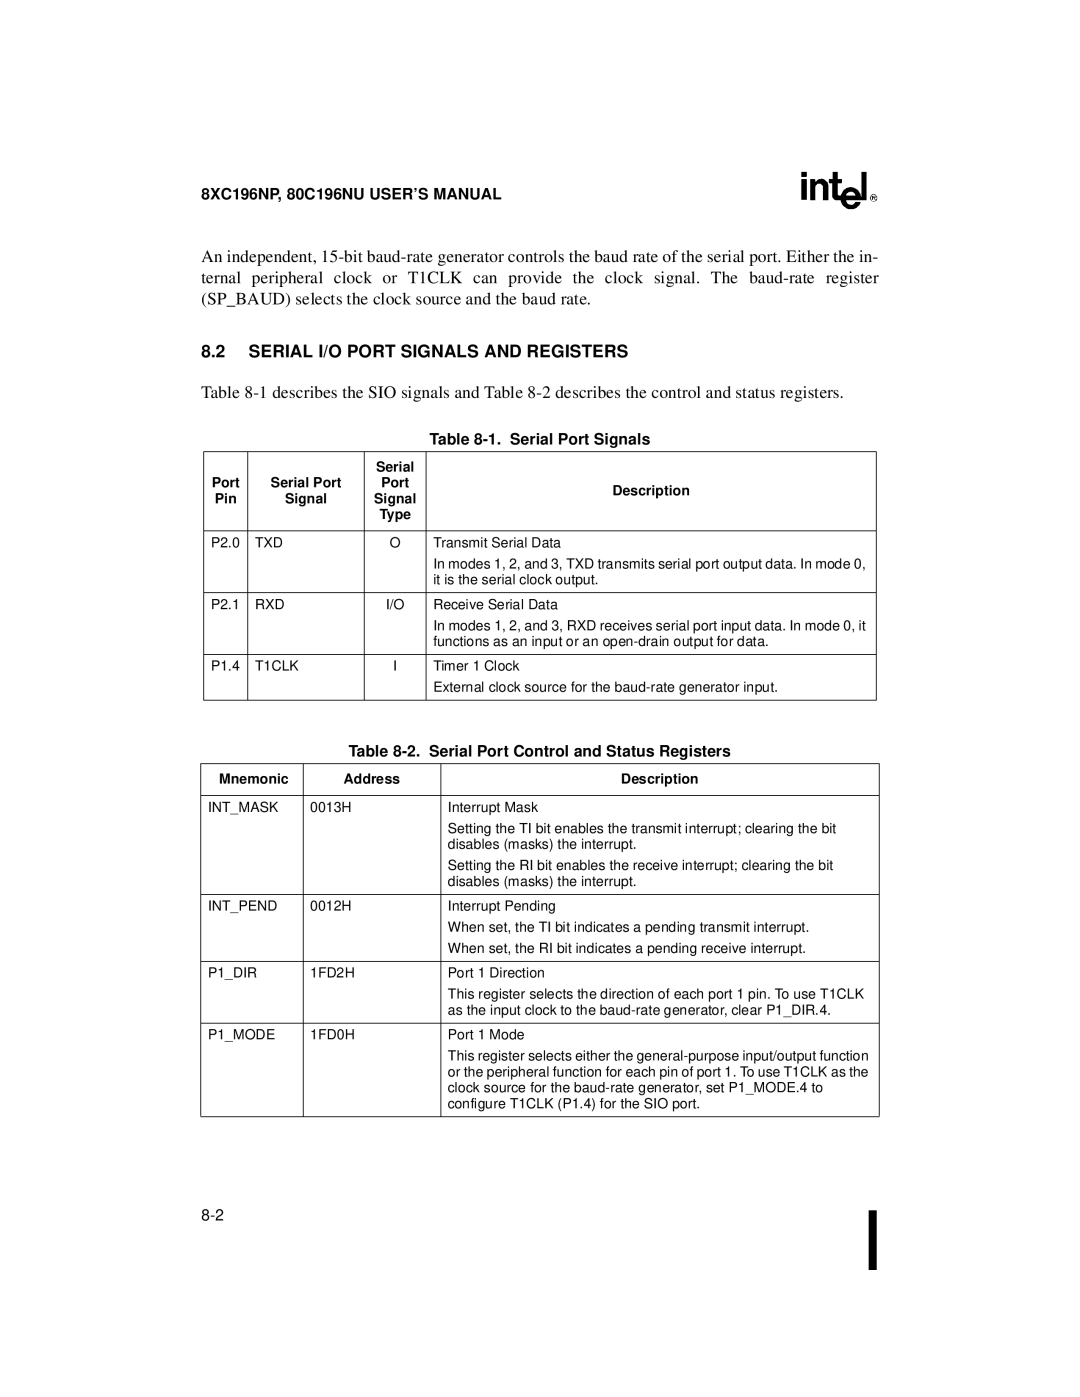 Intel 8XC196NP Serial I/O Port Signals and Registers, Serial Port Signals, Serial Port Control and Status Registers, Pin 